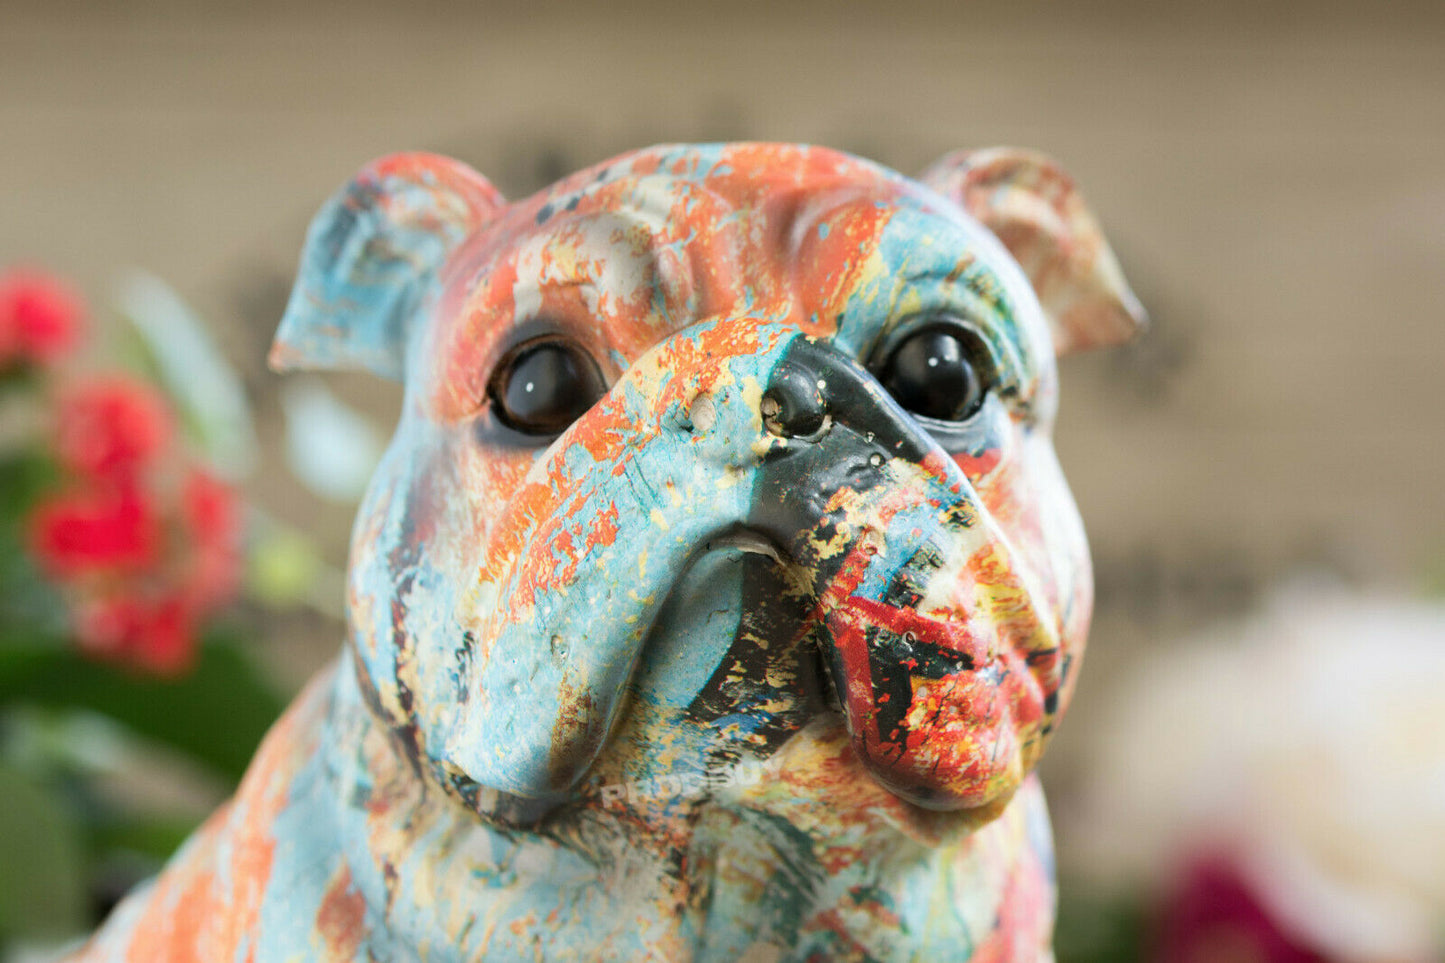 Paint Splatter British Bulldog Ornament